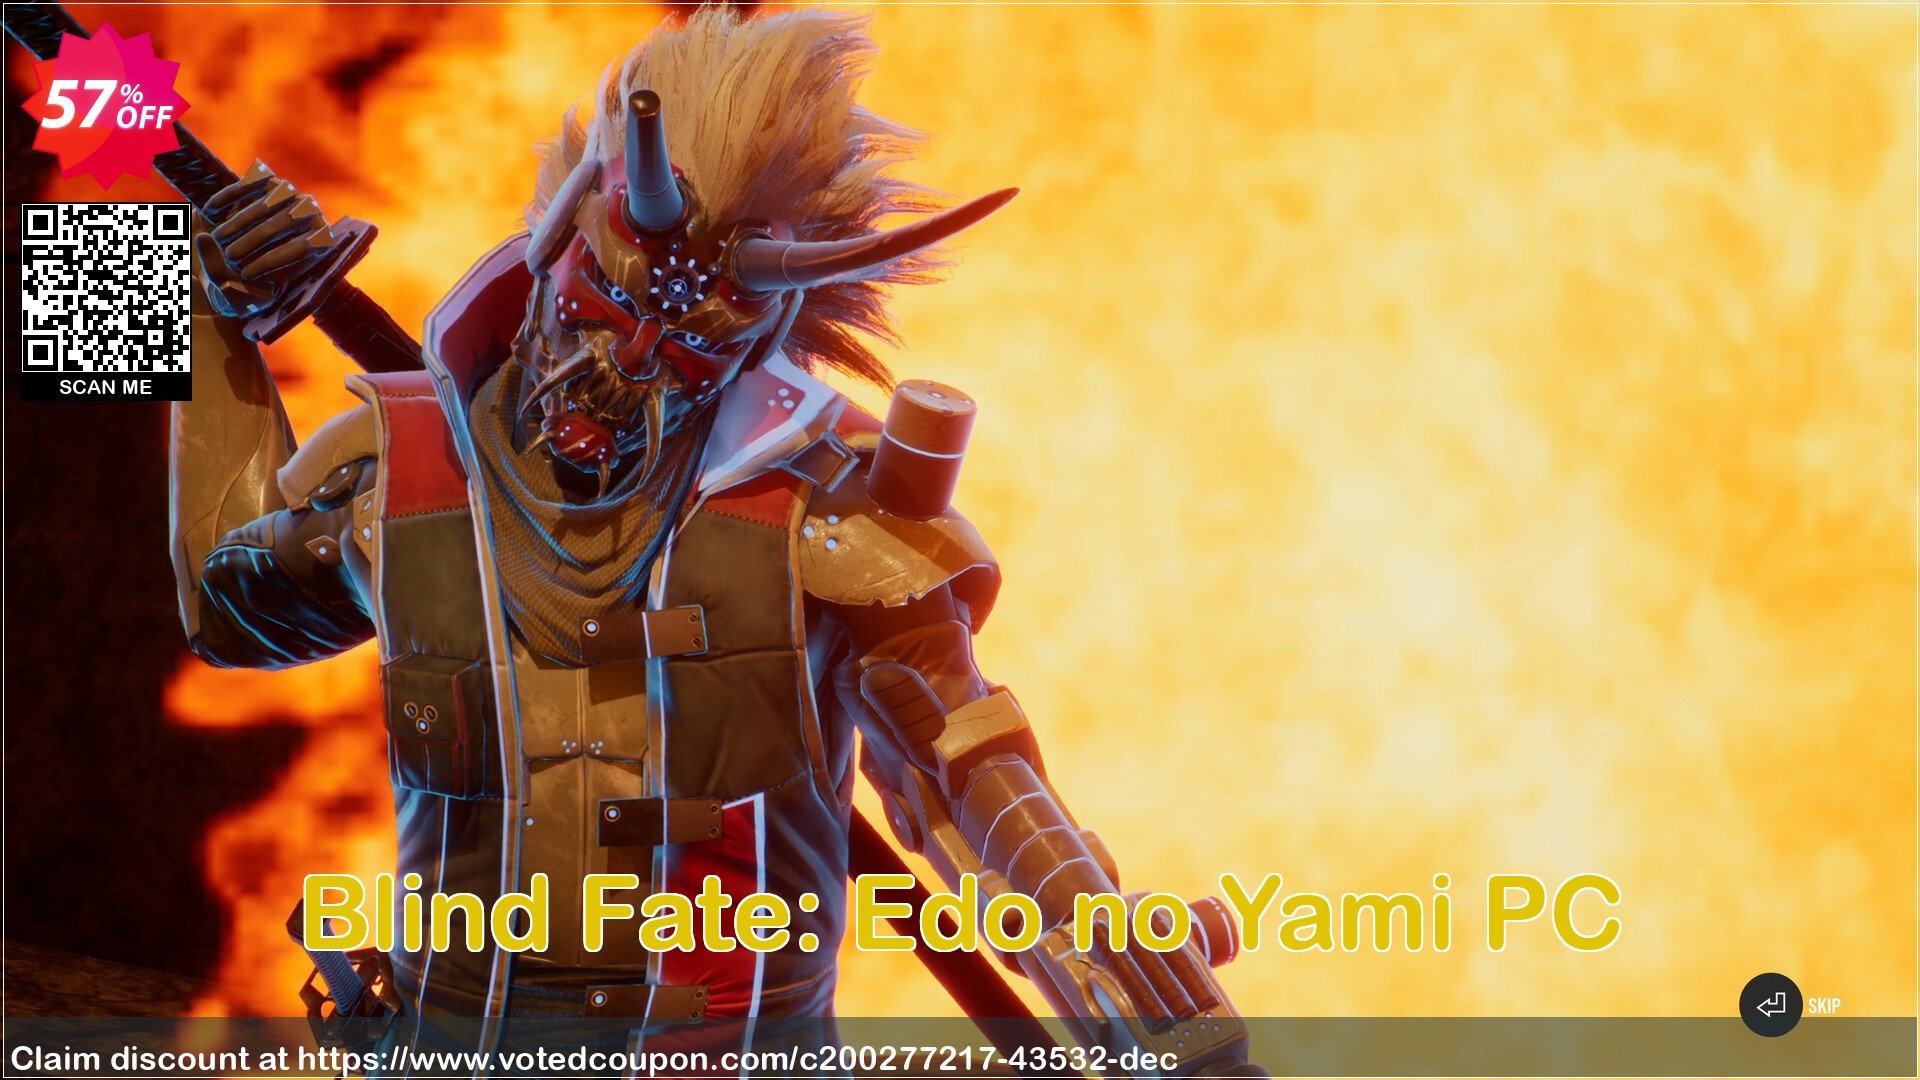 Blind Fate: Edo no Yami PC Coupon Code May 2024, 57% OFF - VotedCoupon